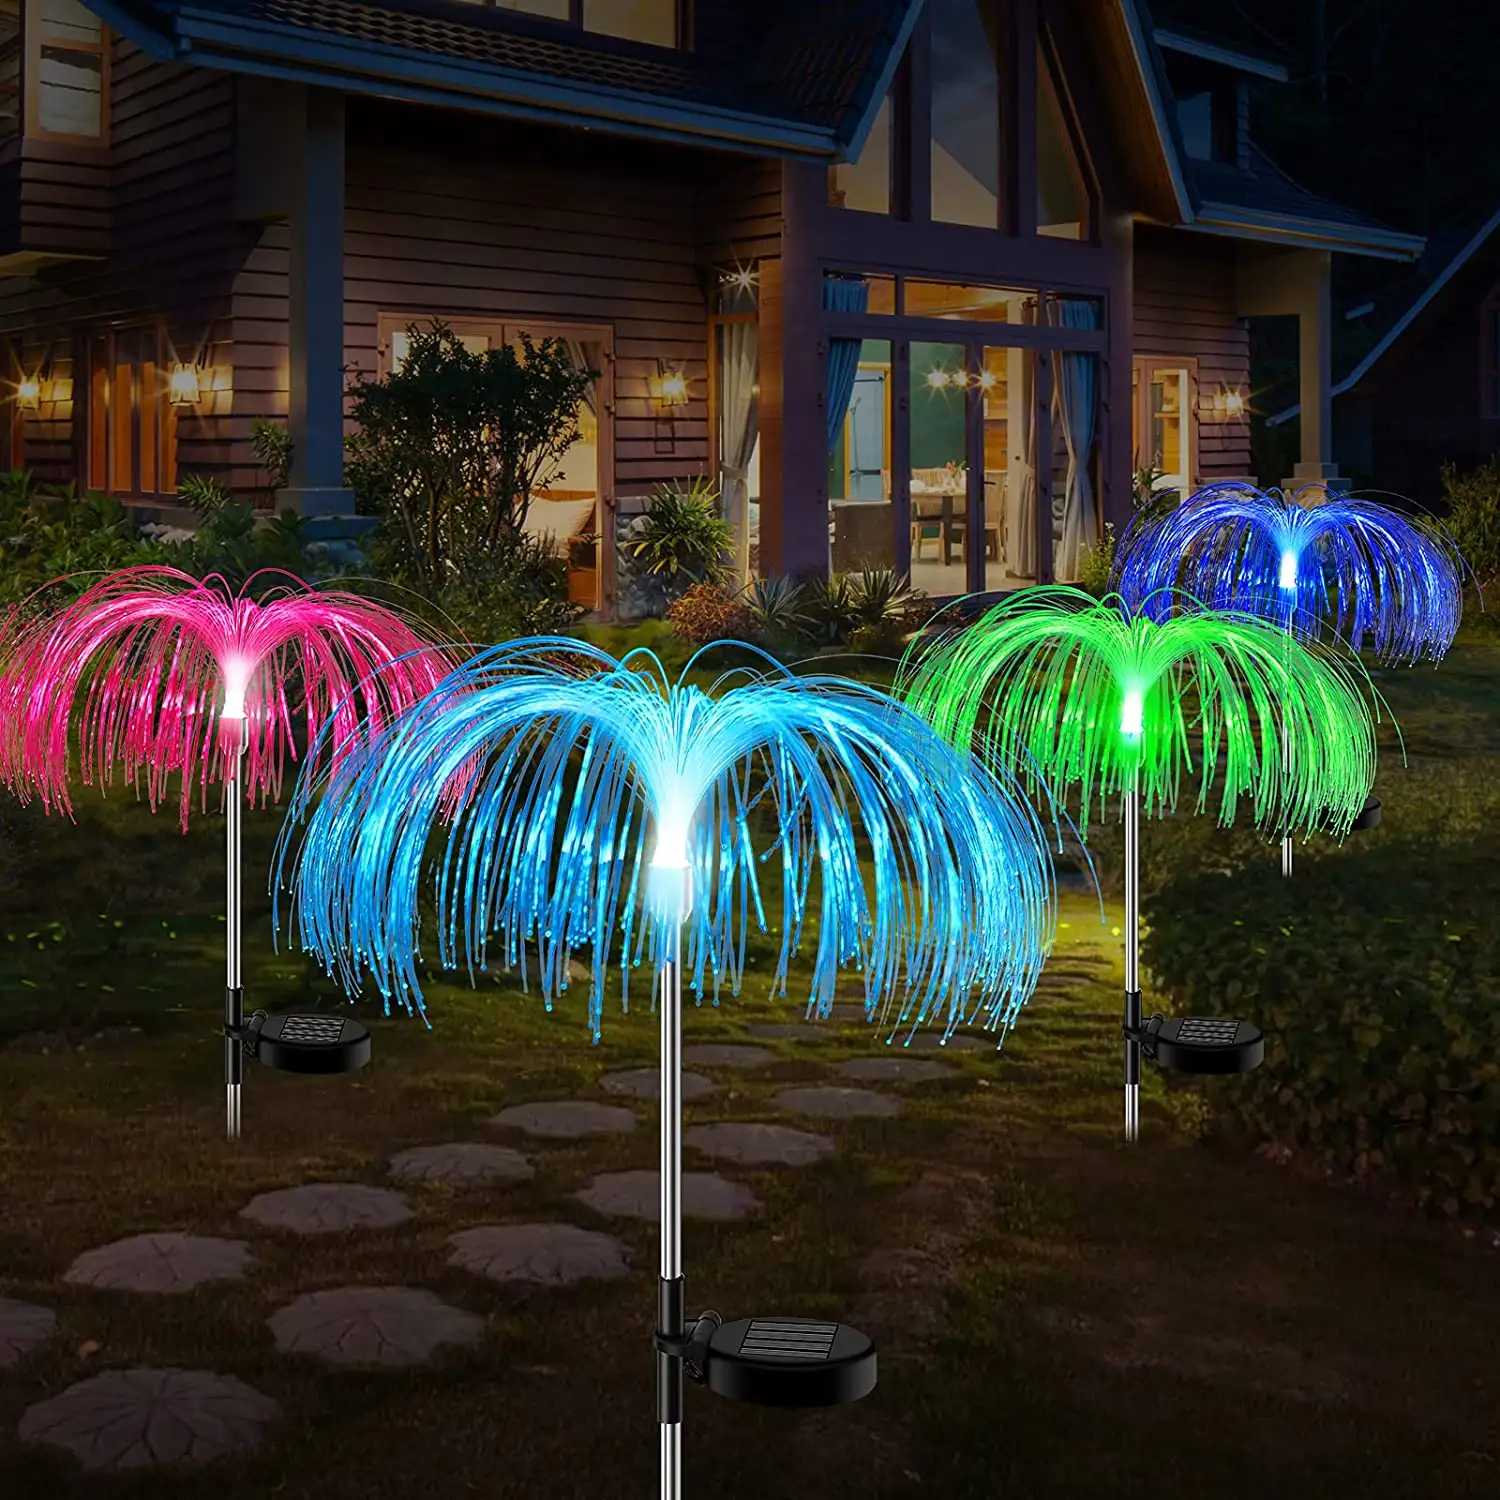 2022 Landscape decorative IP65 outdoor waterproof Solar fiber optic lamp led garden light for Yard Patio Holiday Christmas Decor